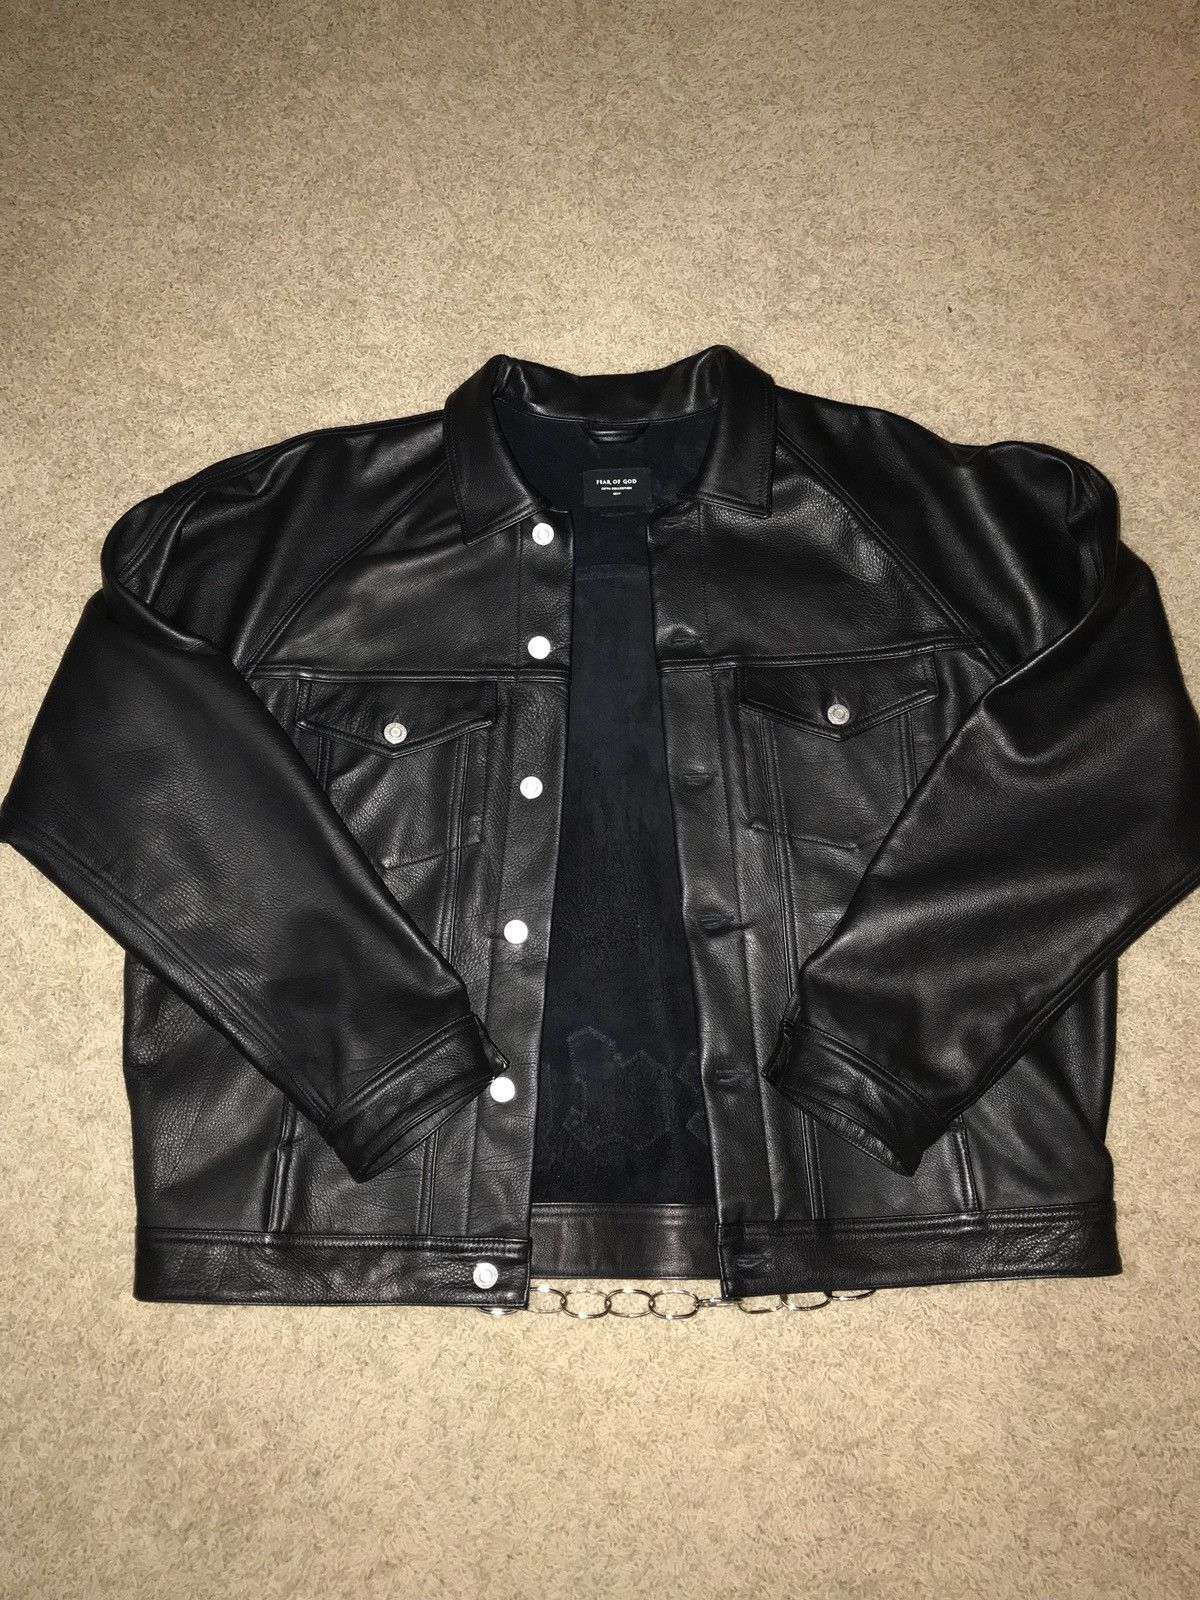 Fear of God Fear Of God X Jay Z Leather Jacket | Grailed